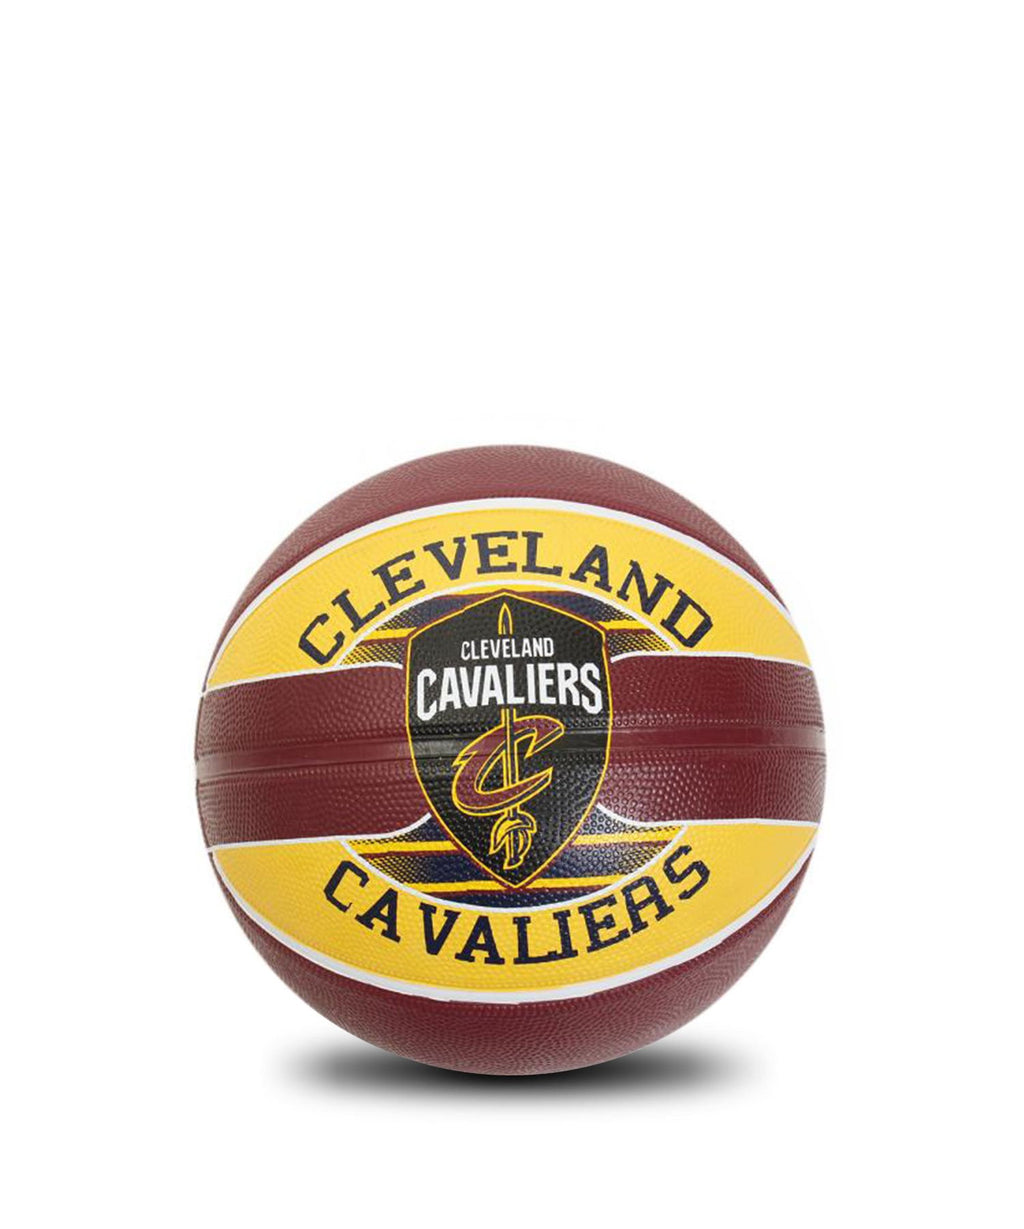 NBA Team Cleveland Cavaliers (Outdoor)